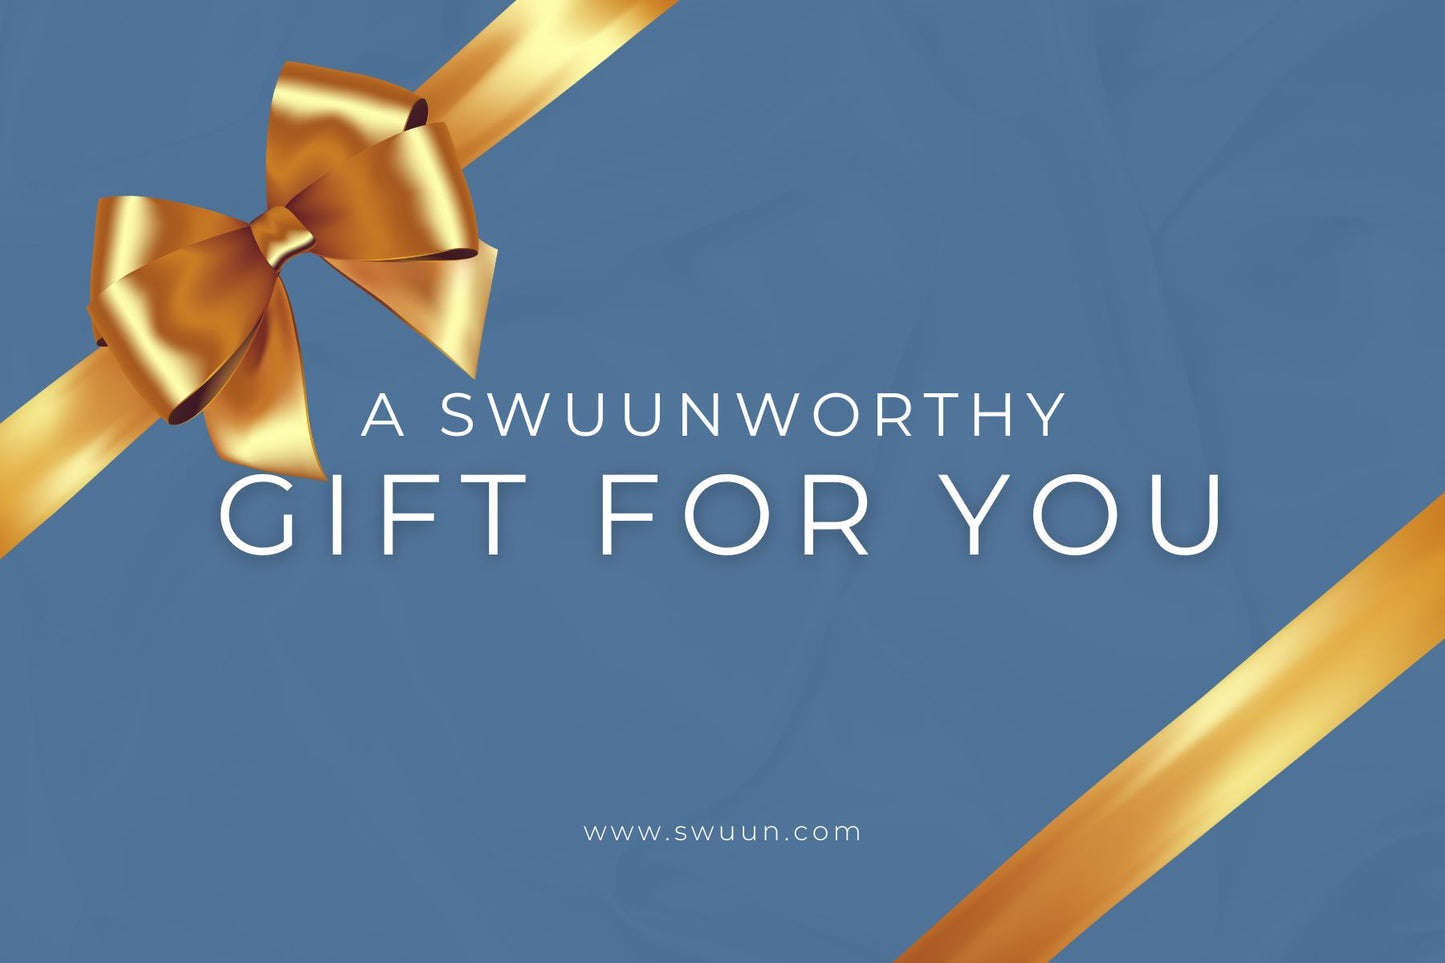 A Swuunworthy Gift Card